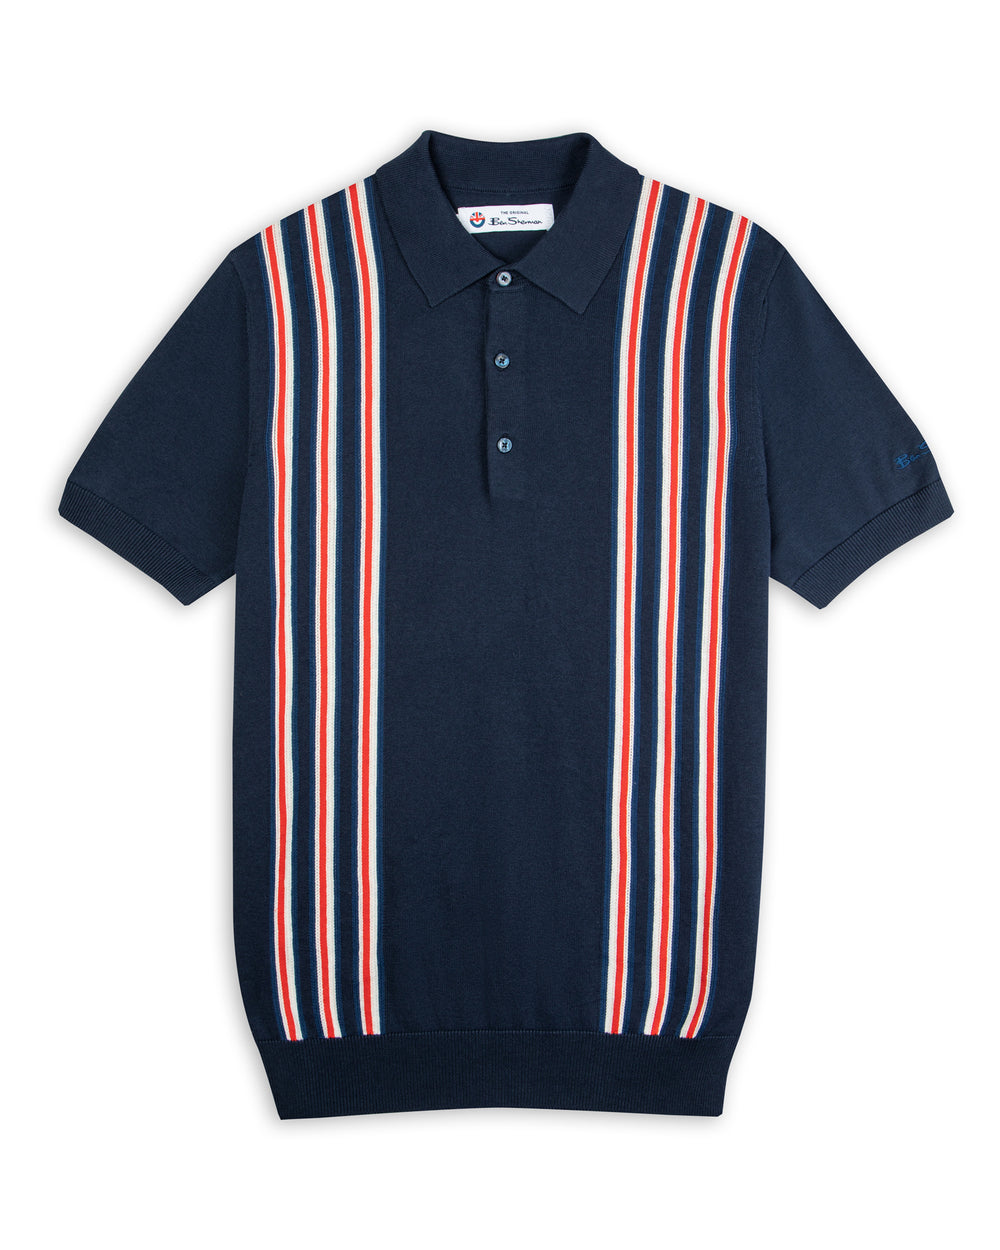 Team GB Men's Union Stripe Knit Polo - Midnight